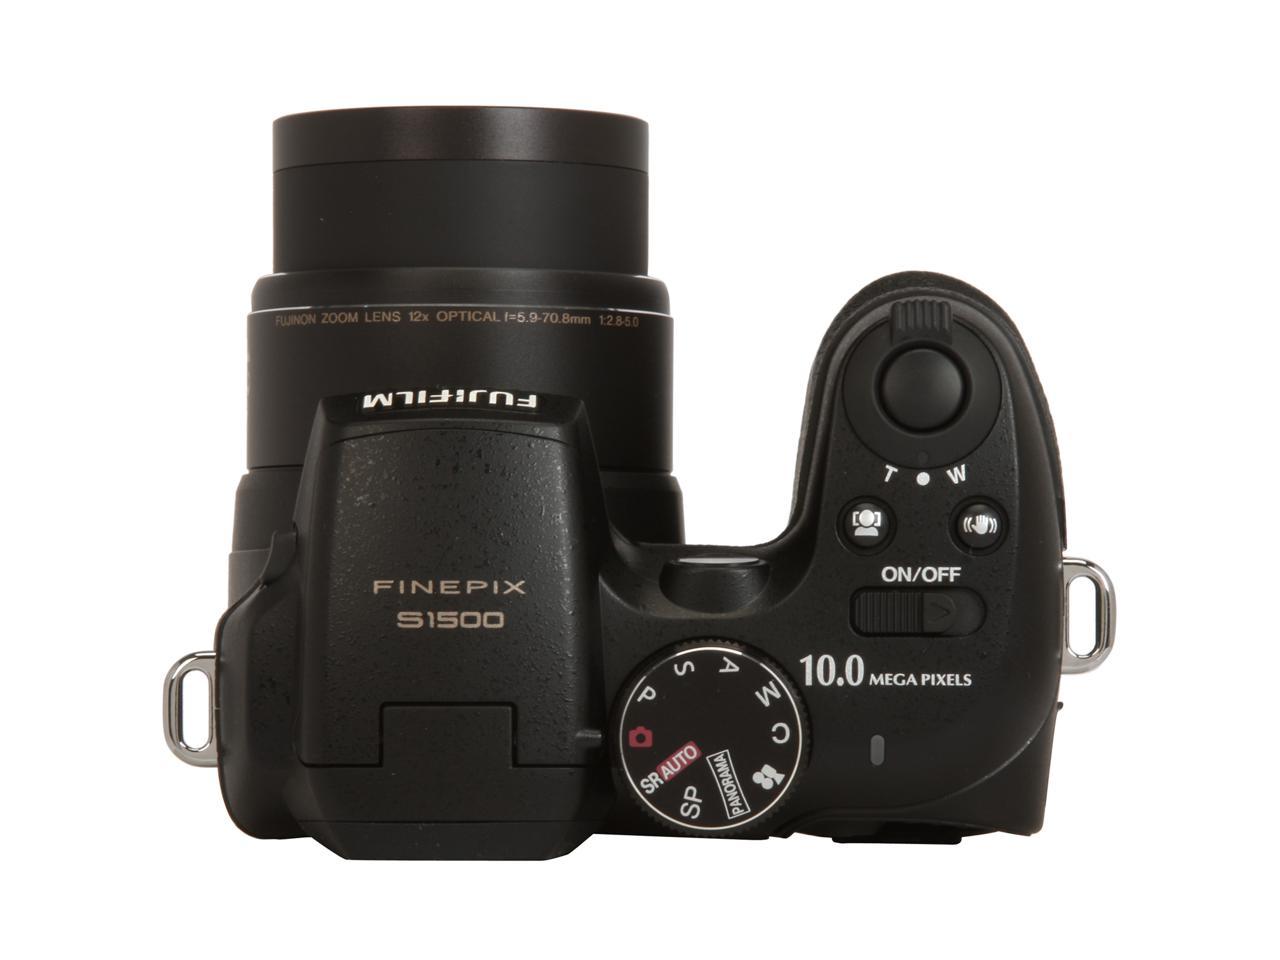 FUJIFILM FINEPIX S1500 Black 10.0 MP Digital Camera - Newegg.ca